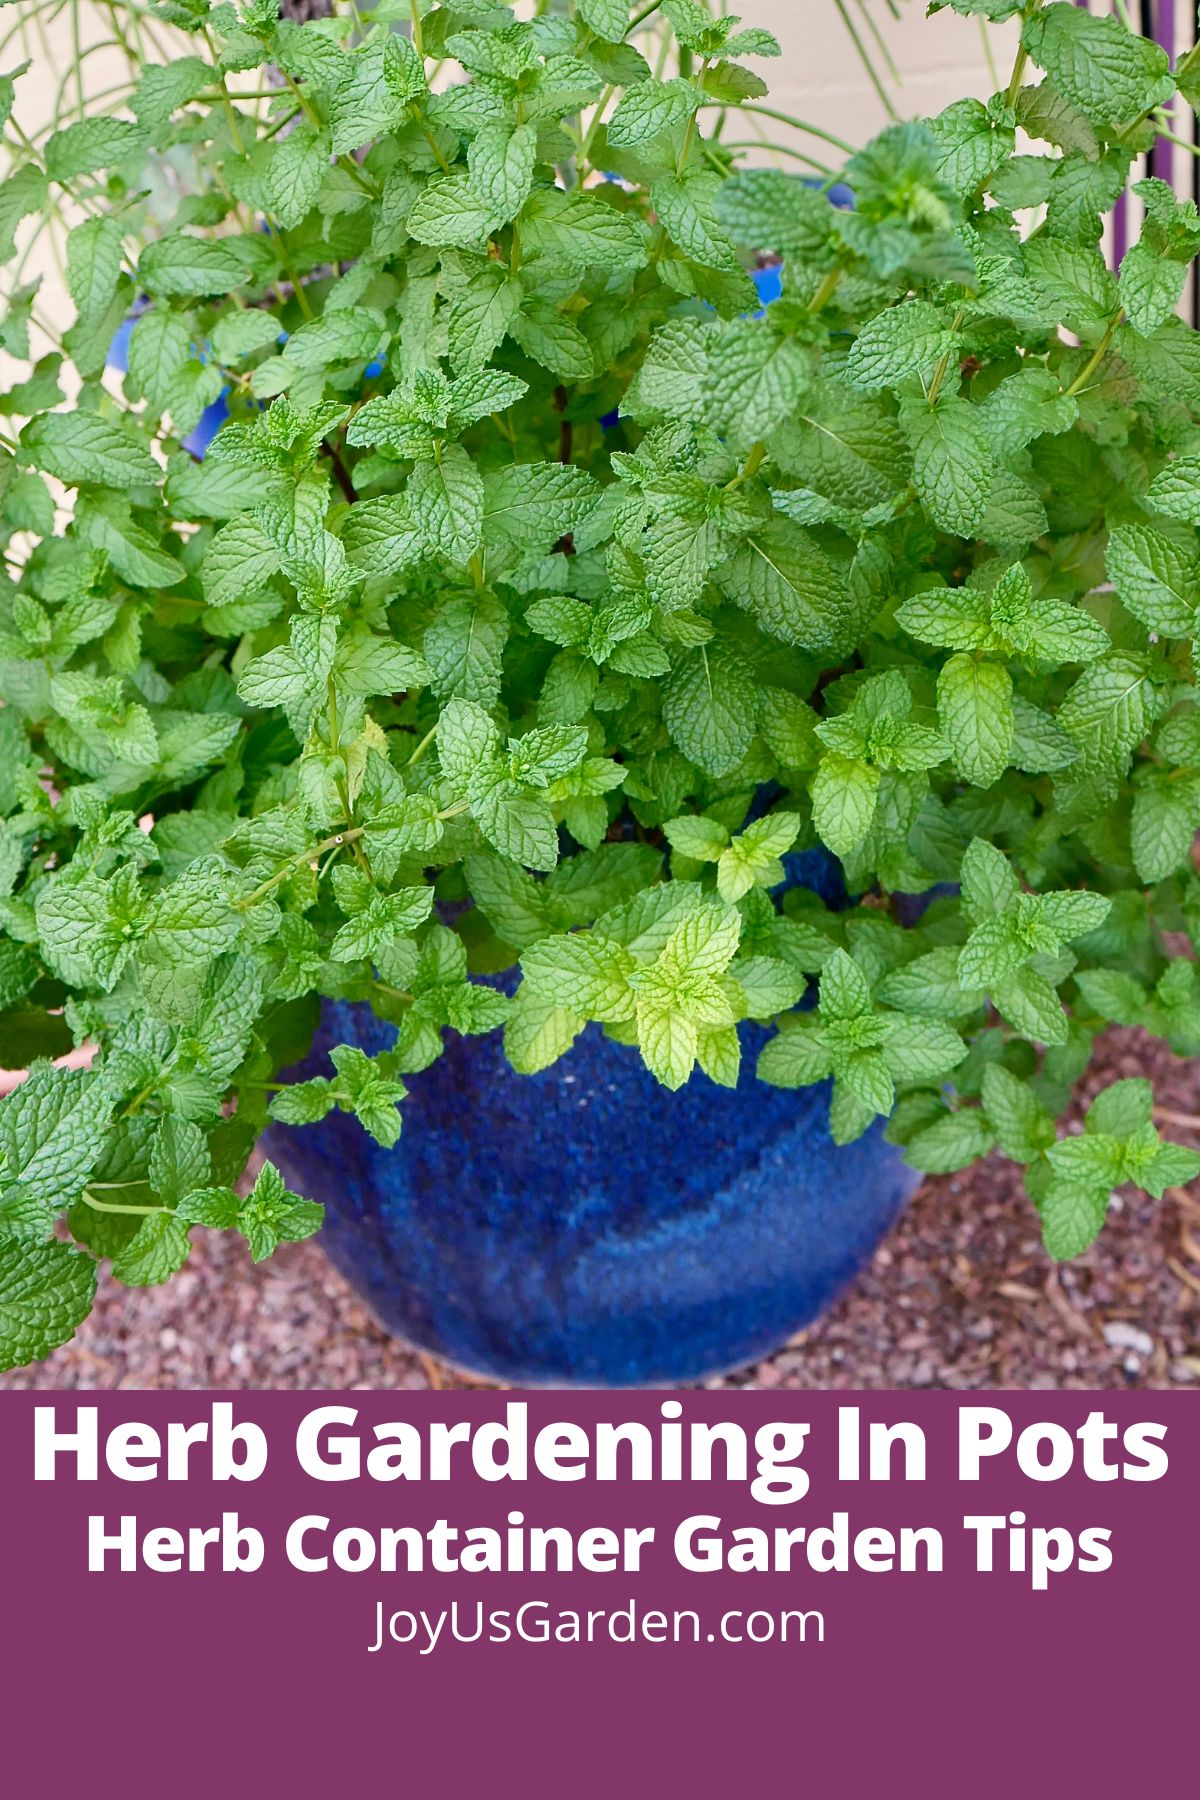 Mint growing in a blue ceramic pot outdoors, text reads herb gardening in pots herb container garden tips joyusgarden.com.